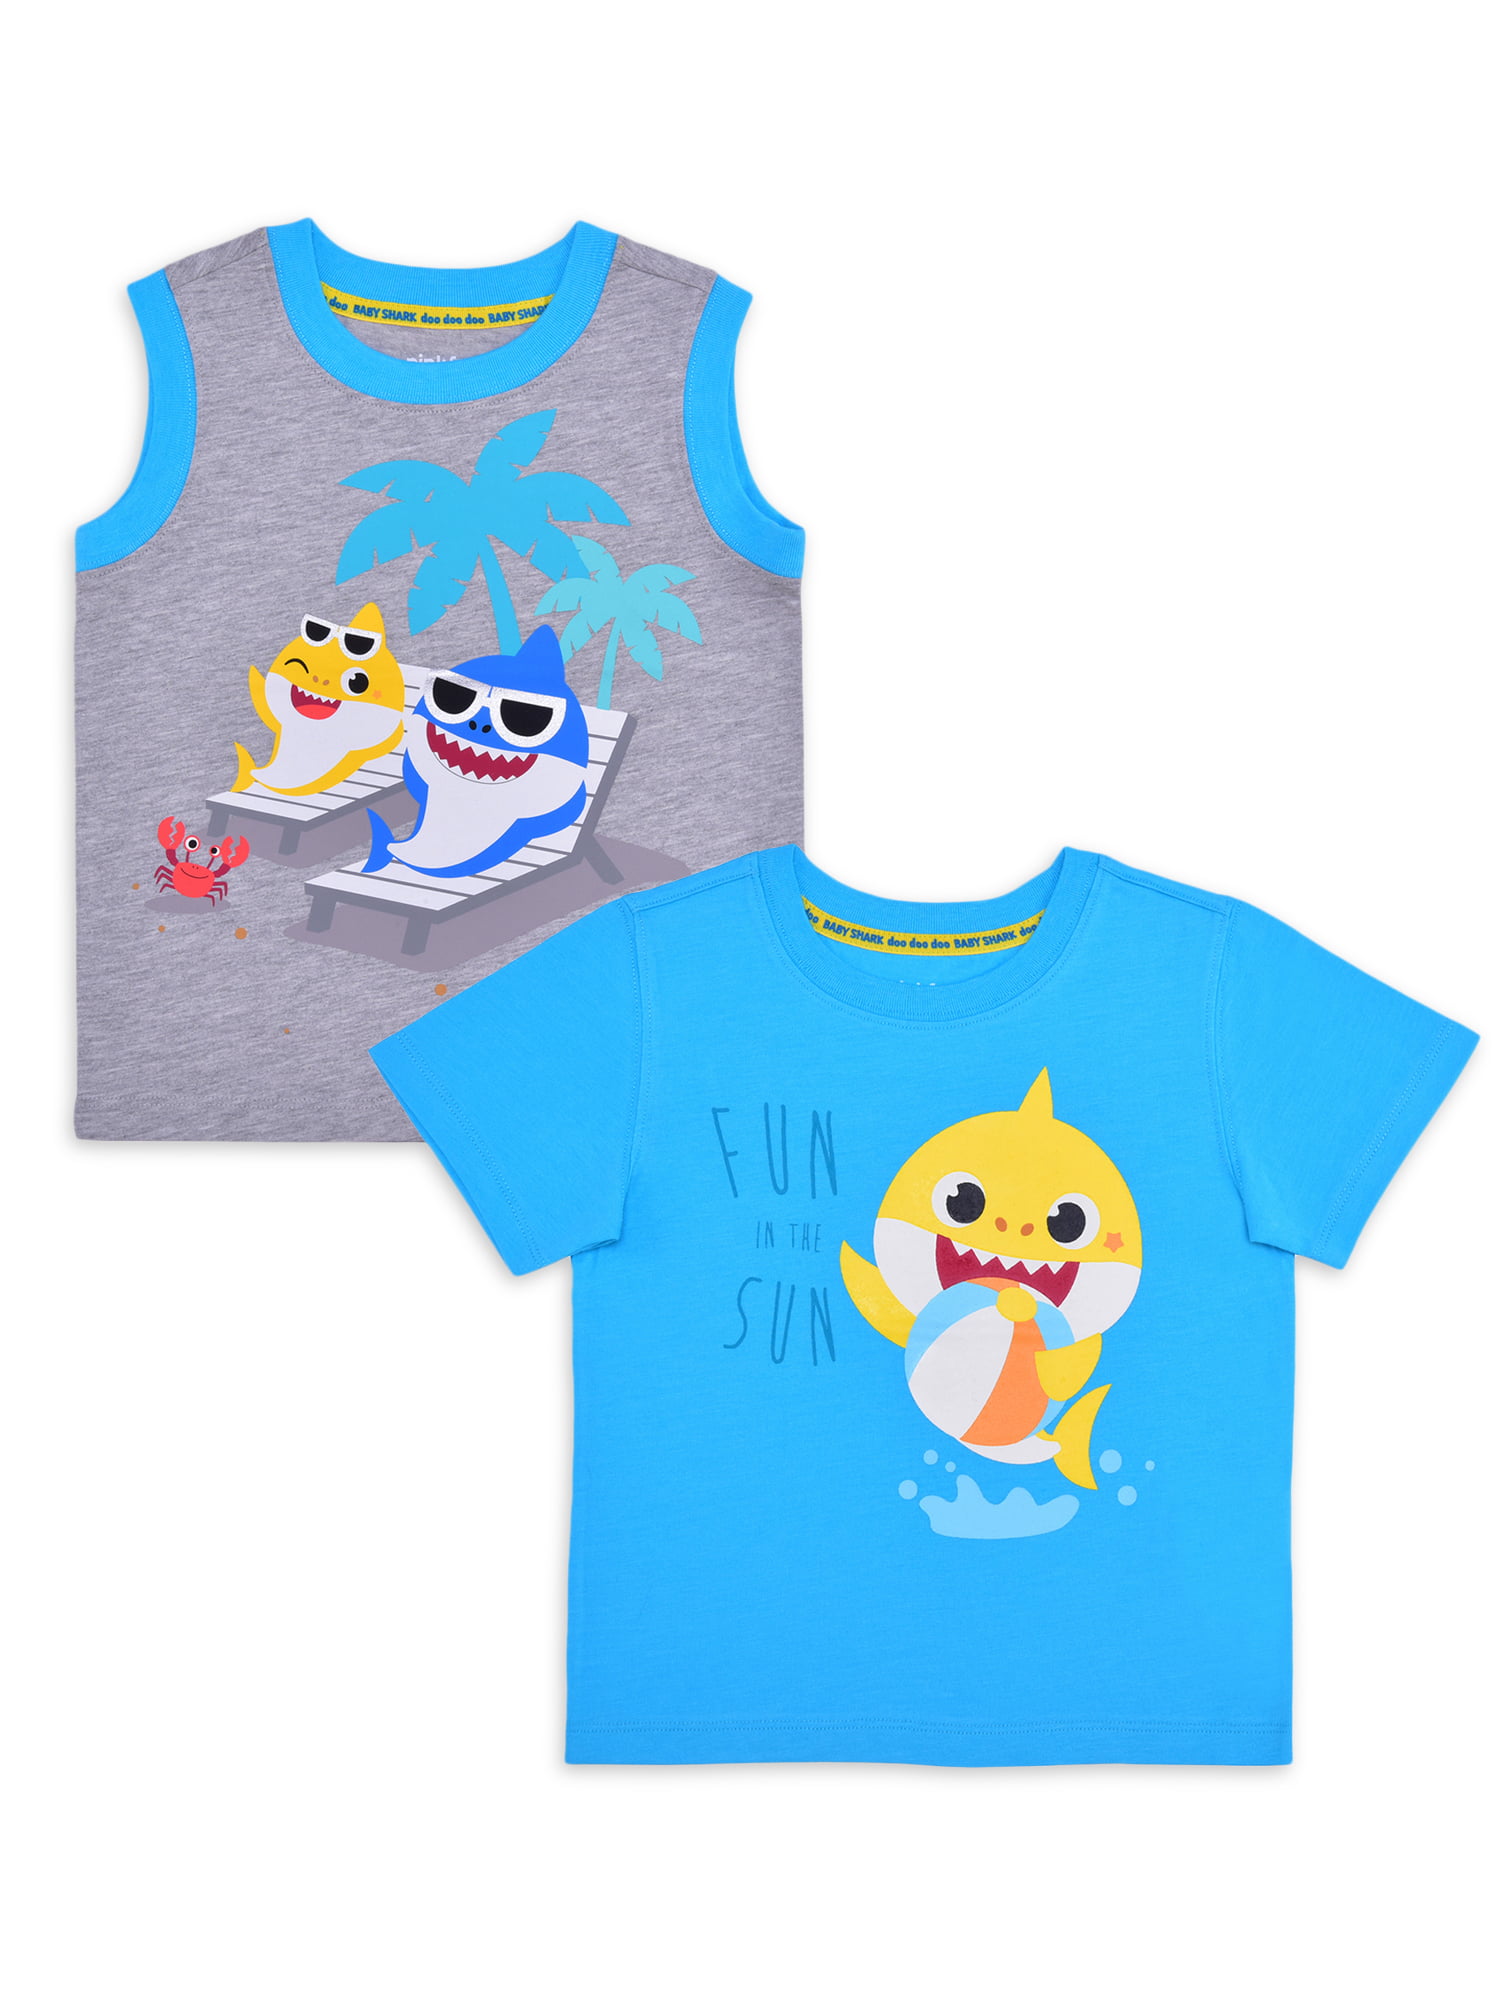 Unisex Kids Fashion Tee Sun Sea Surf T-Shirt 6M-24M 